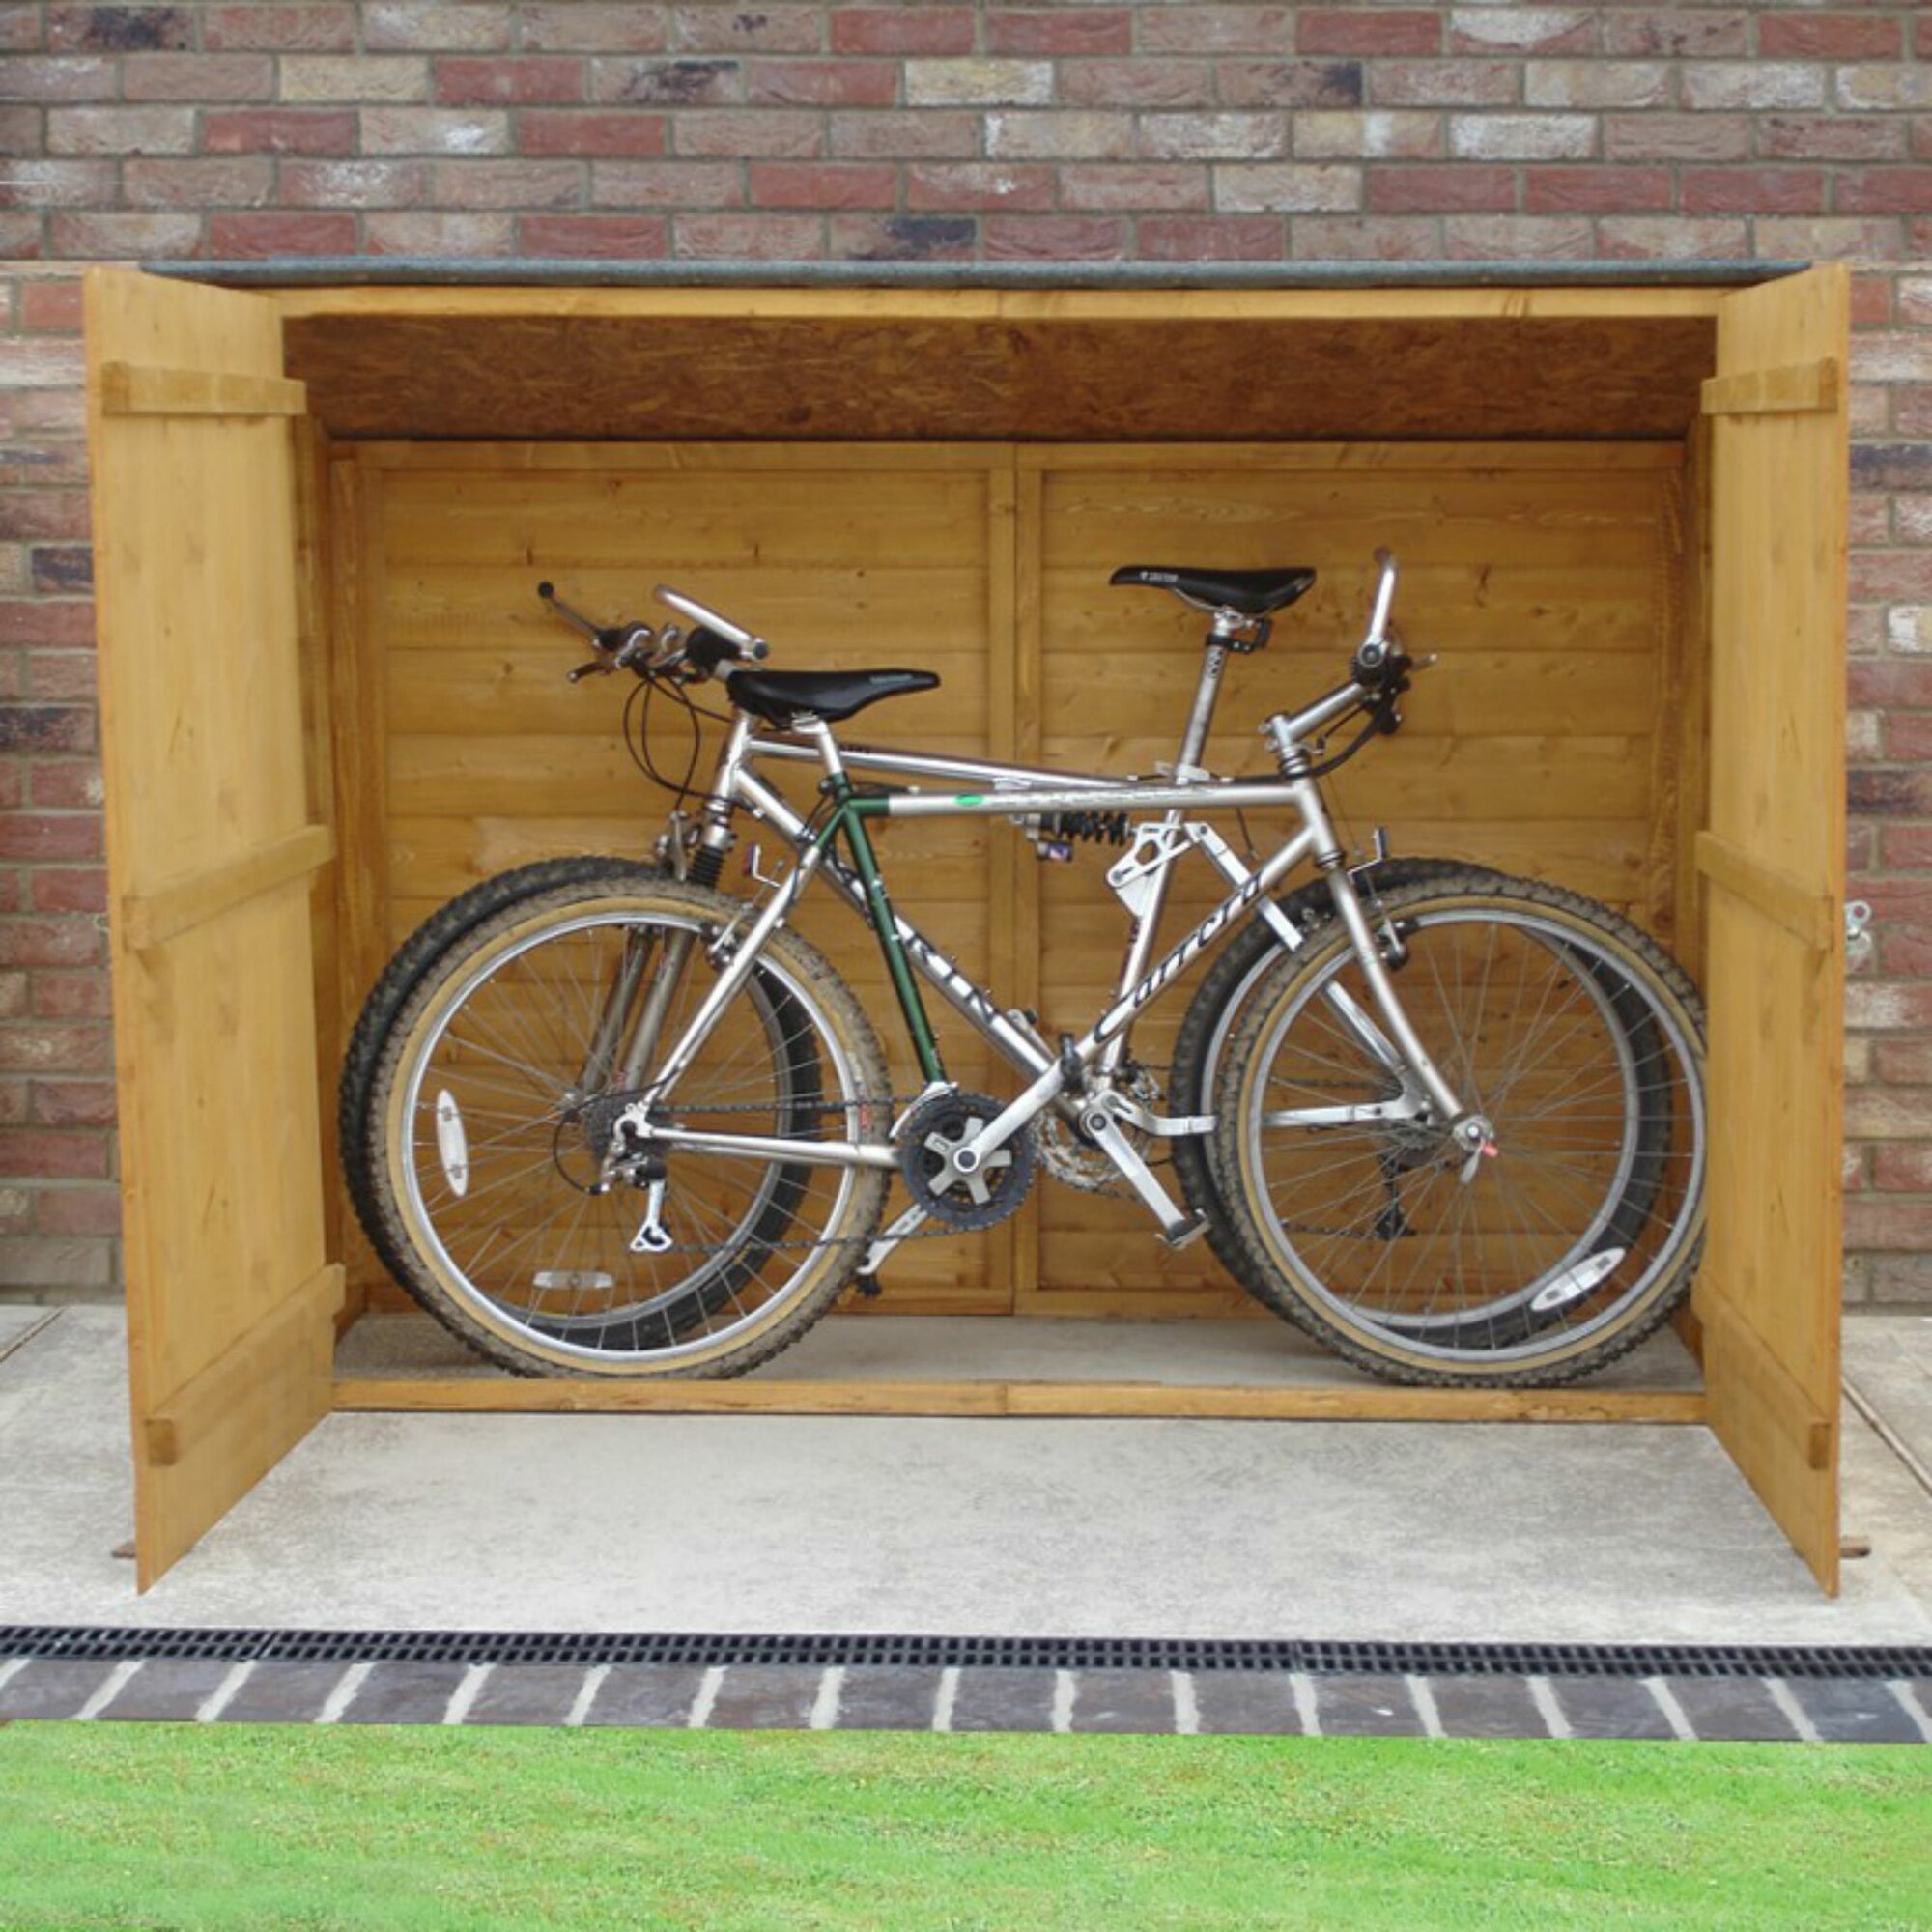 dCor design 6 x 2 Wooden Bike Shed & Reviews | Wayfair.co.uk